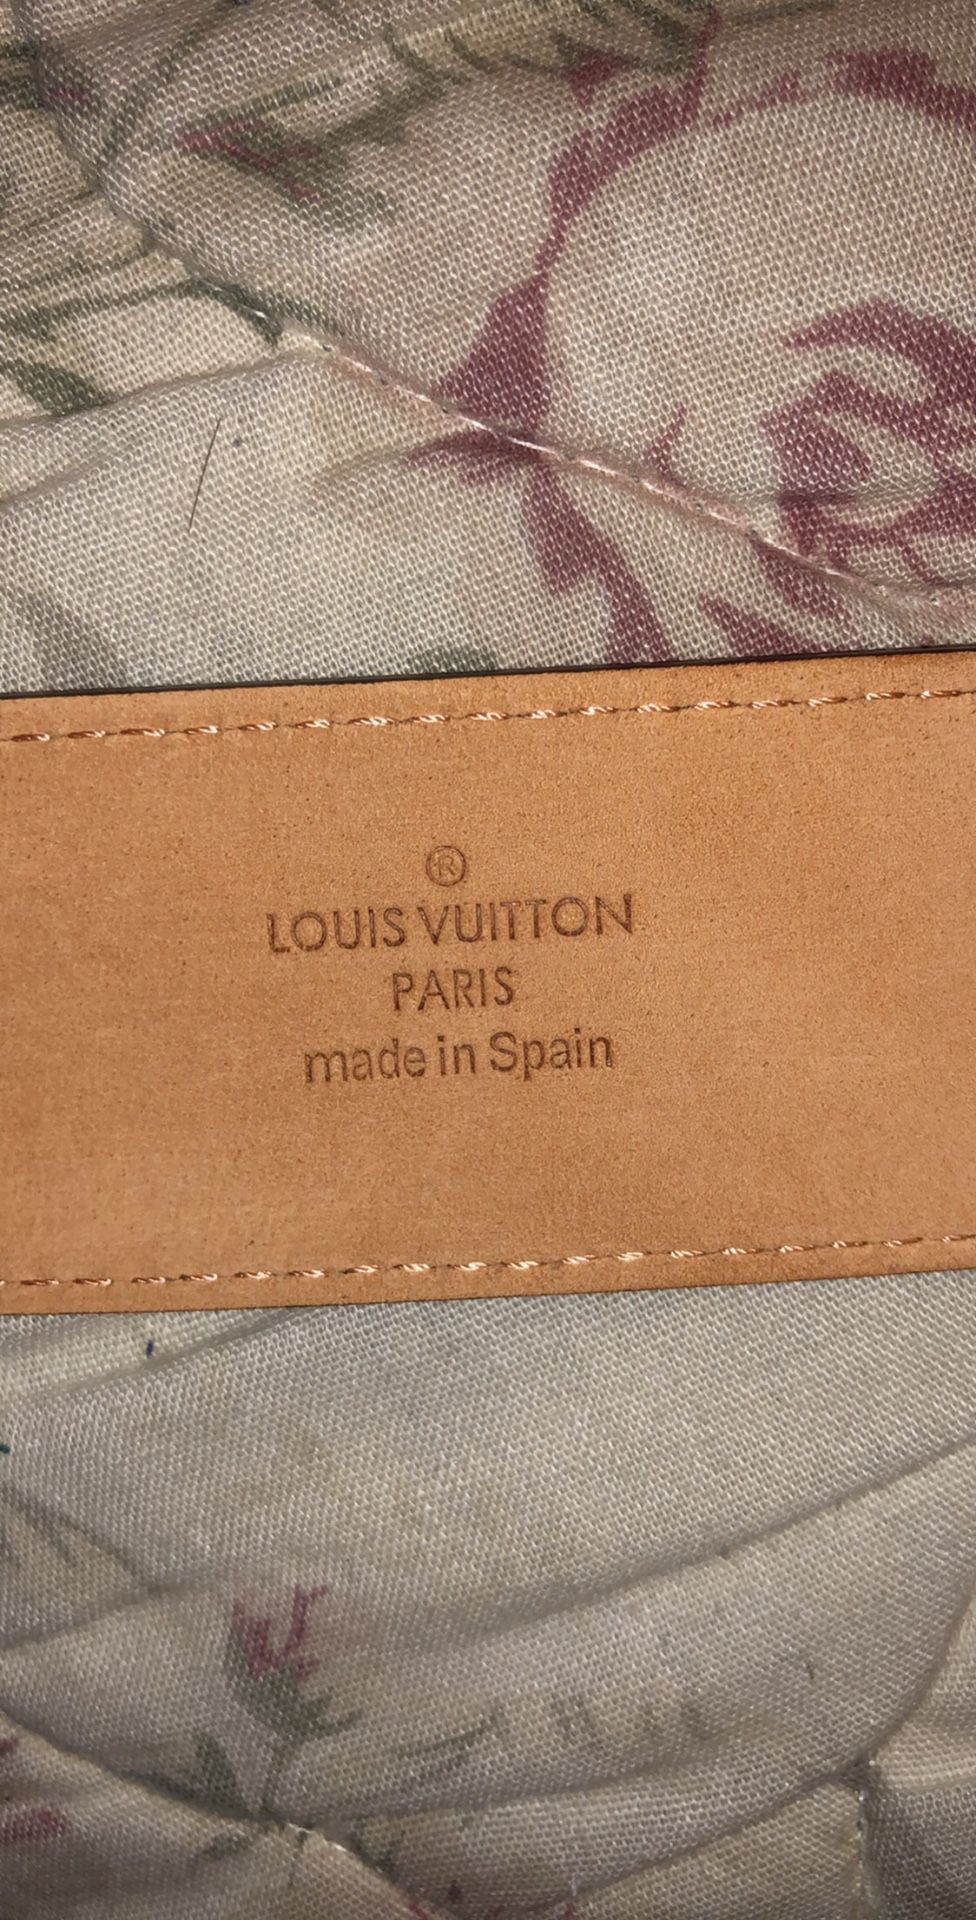 Men's LV Louis Vuitton Belt BRAND NEW Size 42 for Sale in San